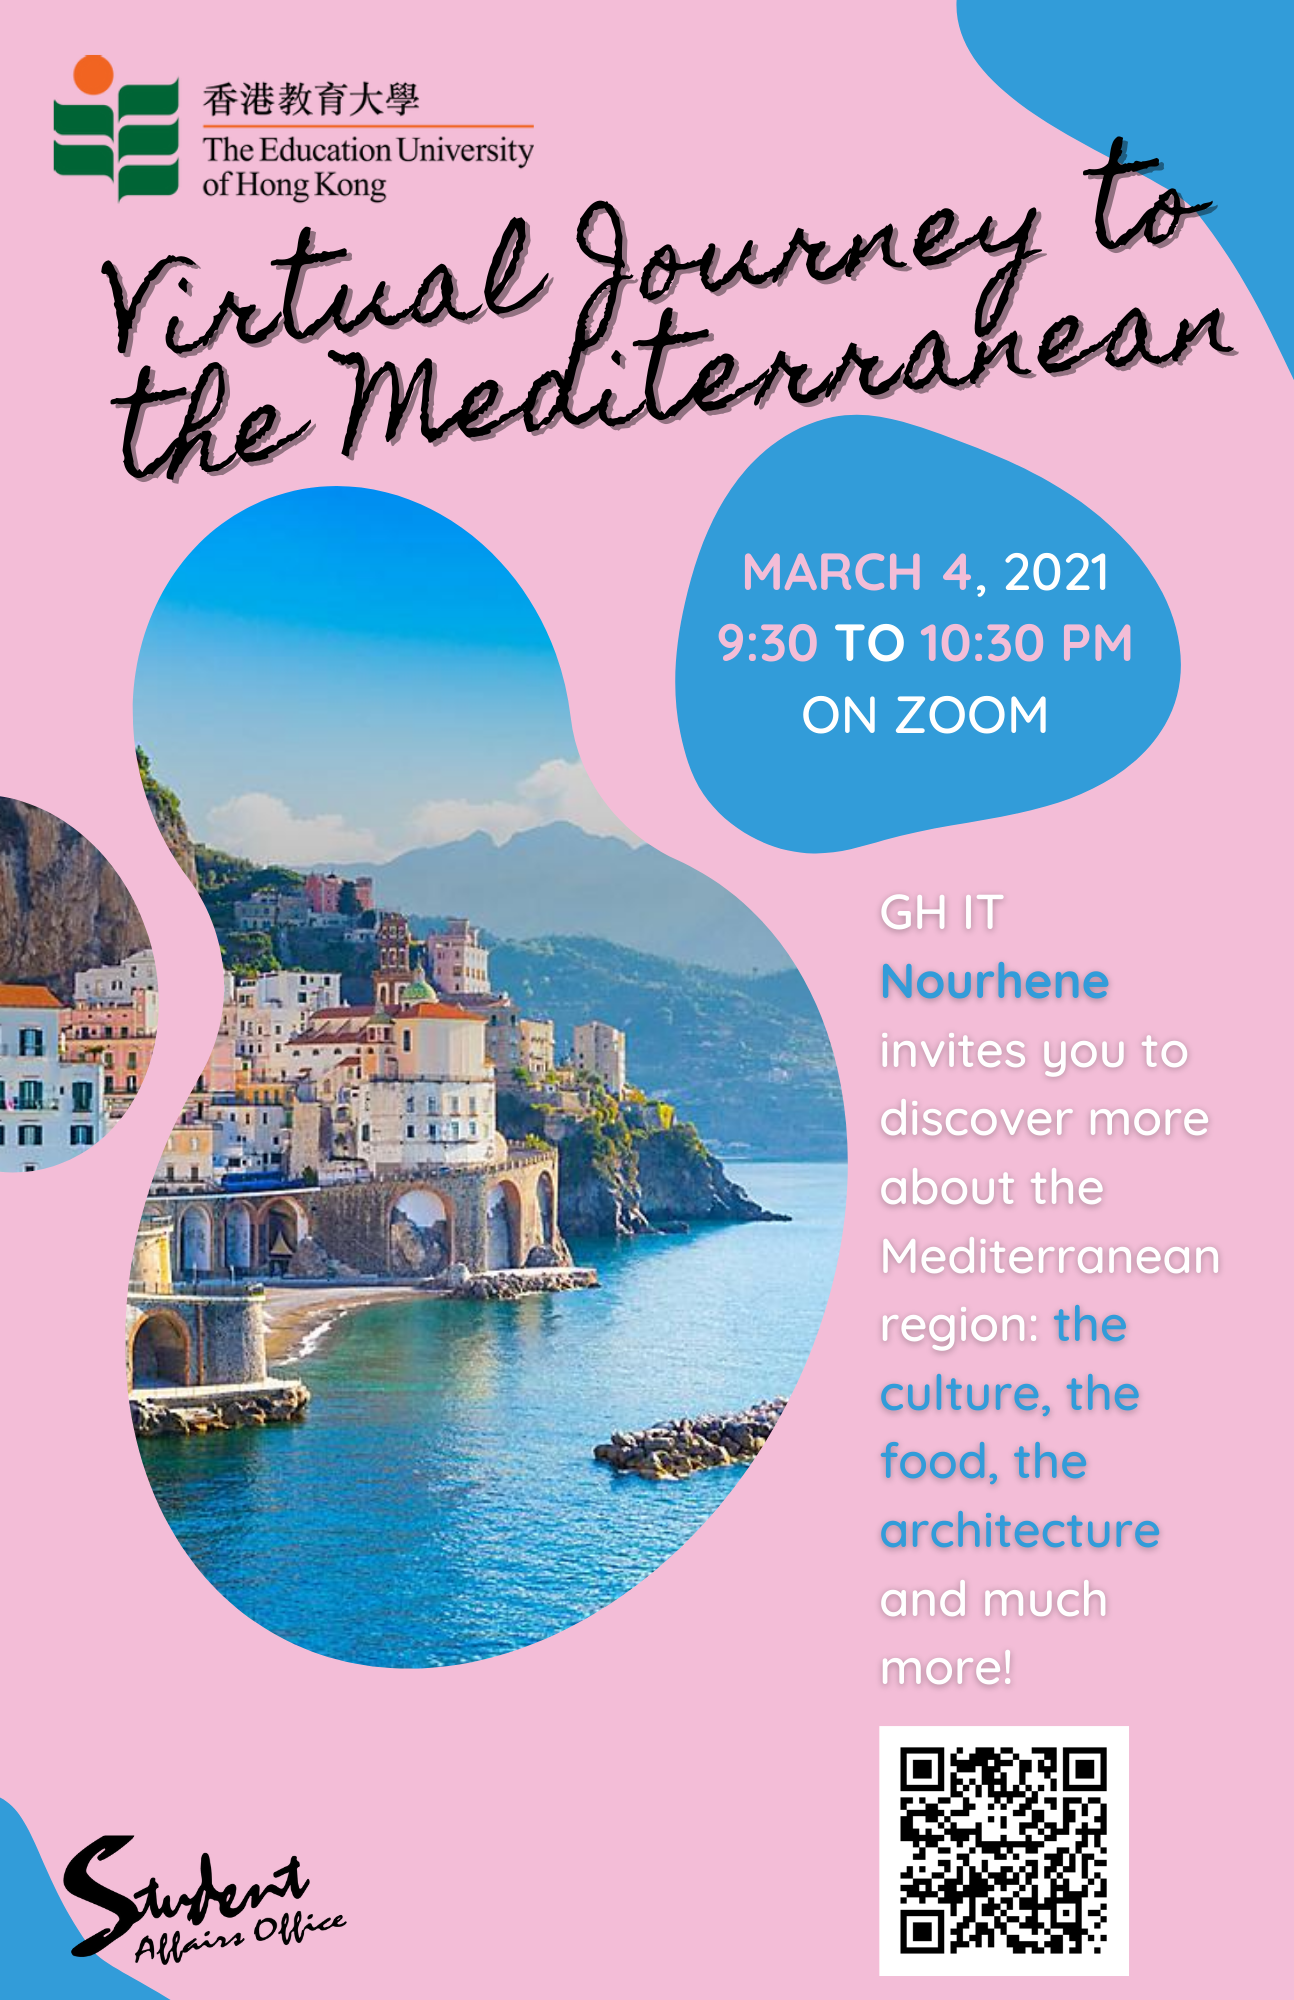 Self Photos / Files - Virtual Journey to the Mediterranean